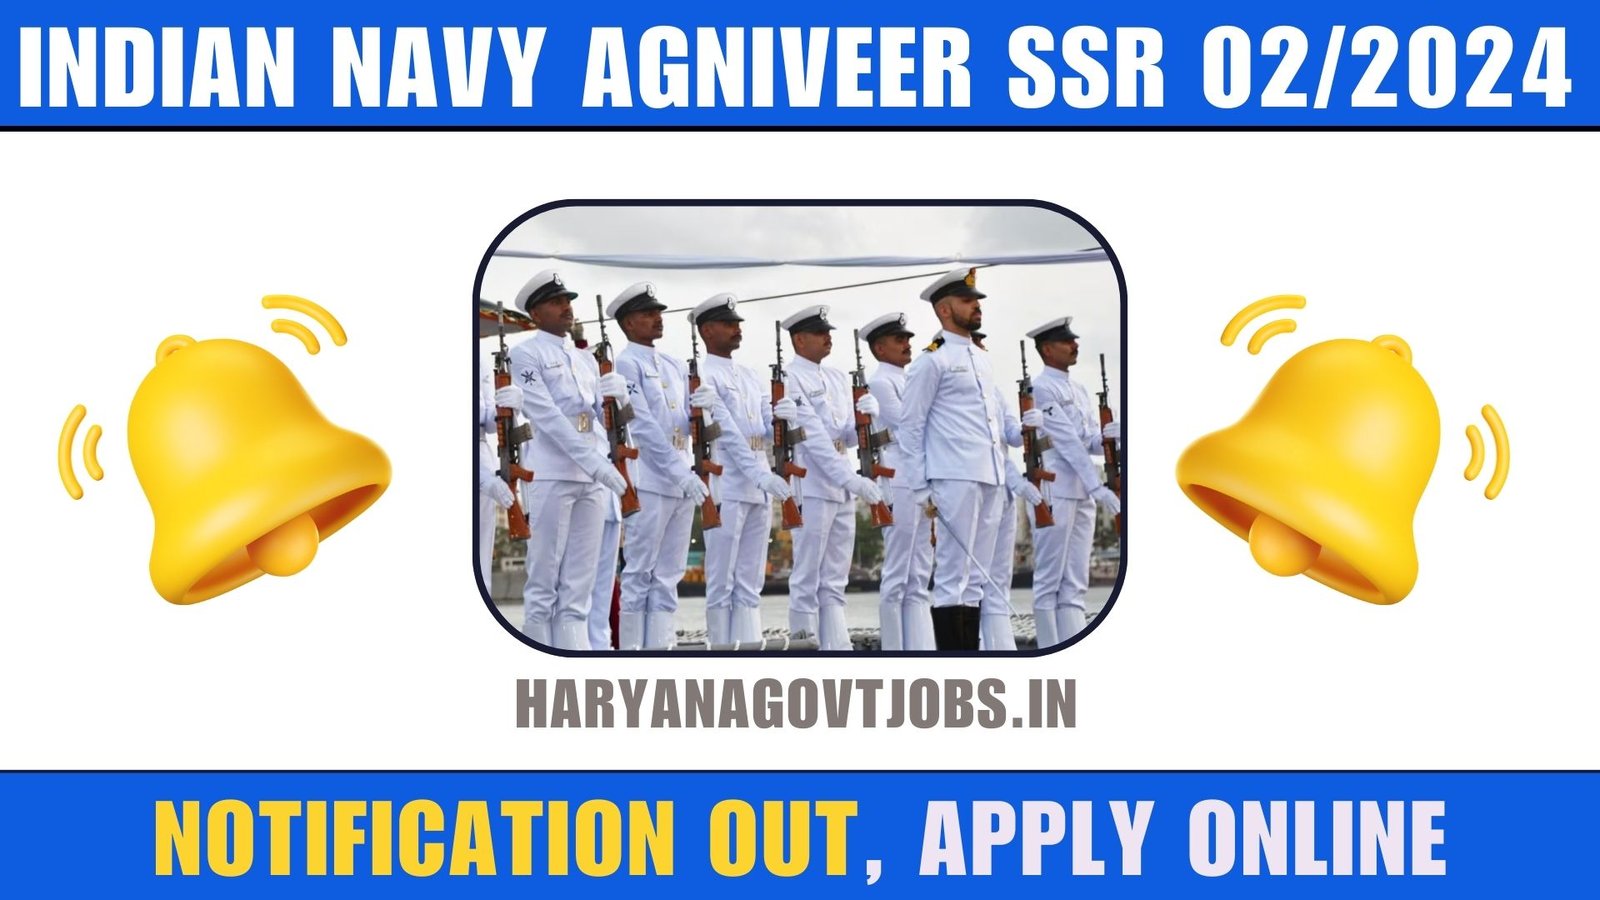 Indian Navy Agniveer SSR 02/2024 Overview